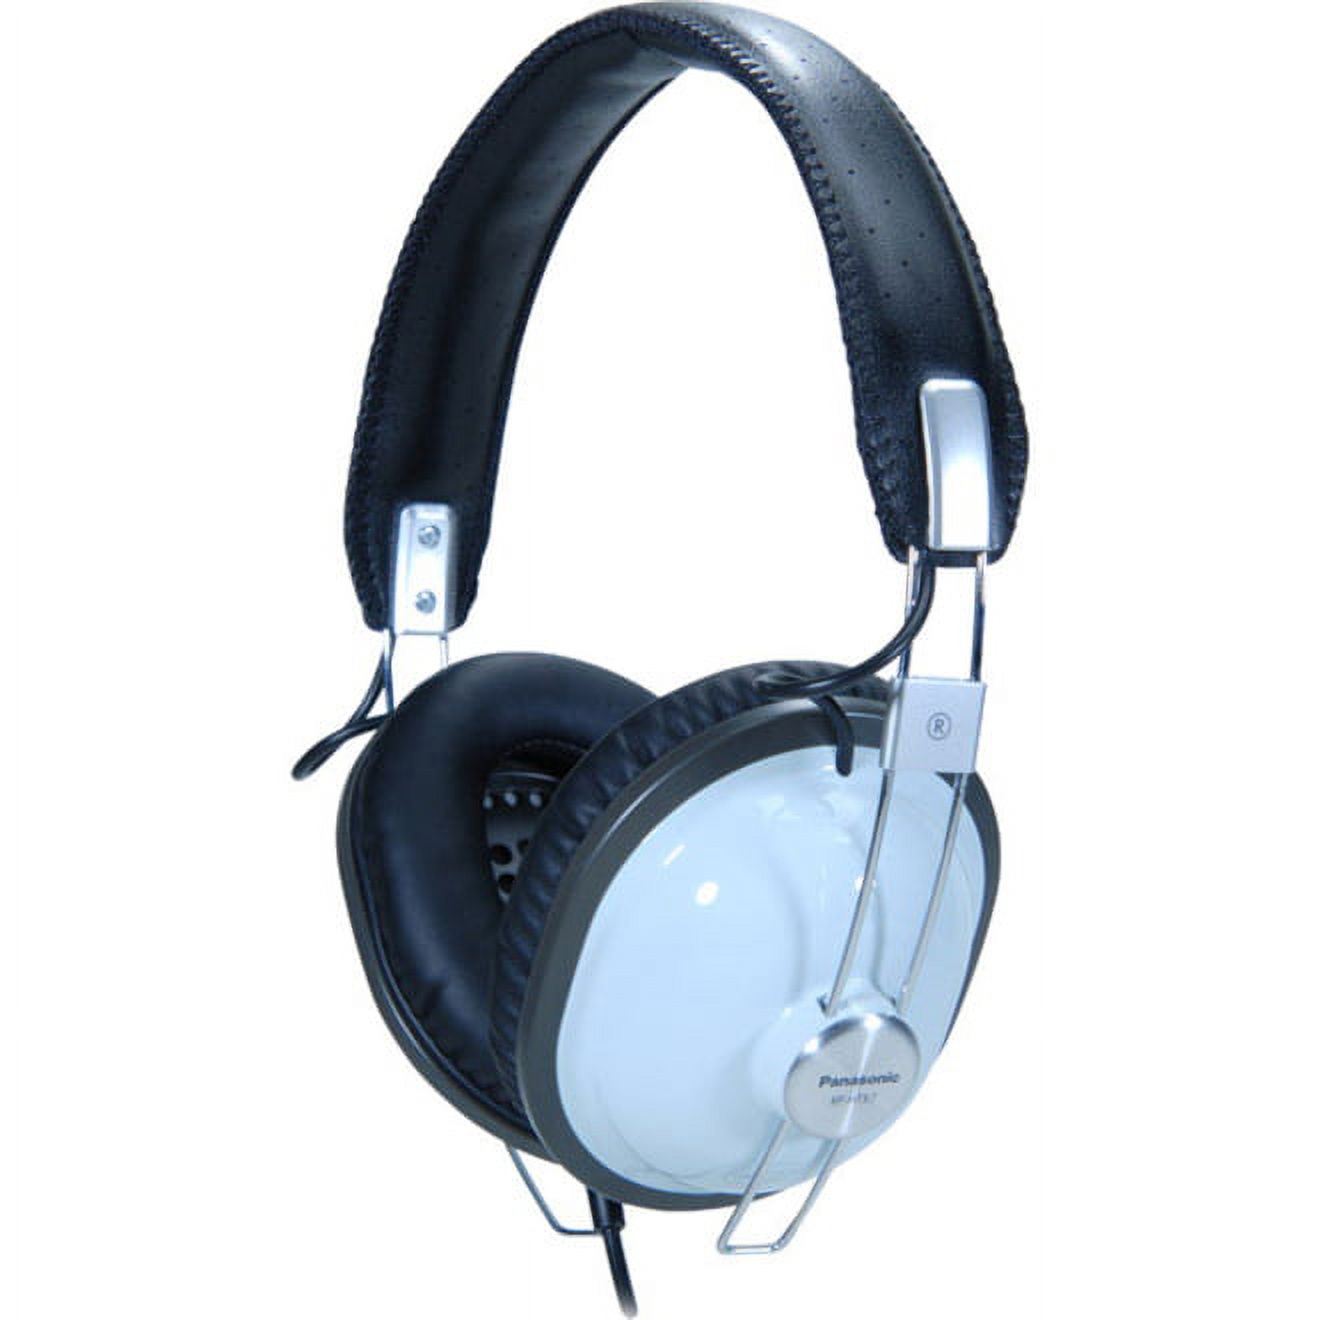 Panasonic Over-Ear Headphones Black, RP-HTX7-A1 - image 1 of 2